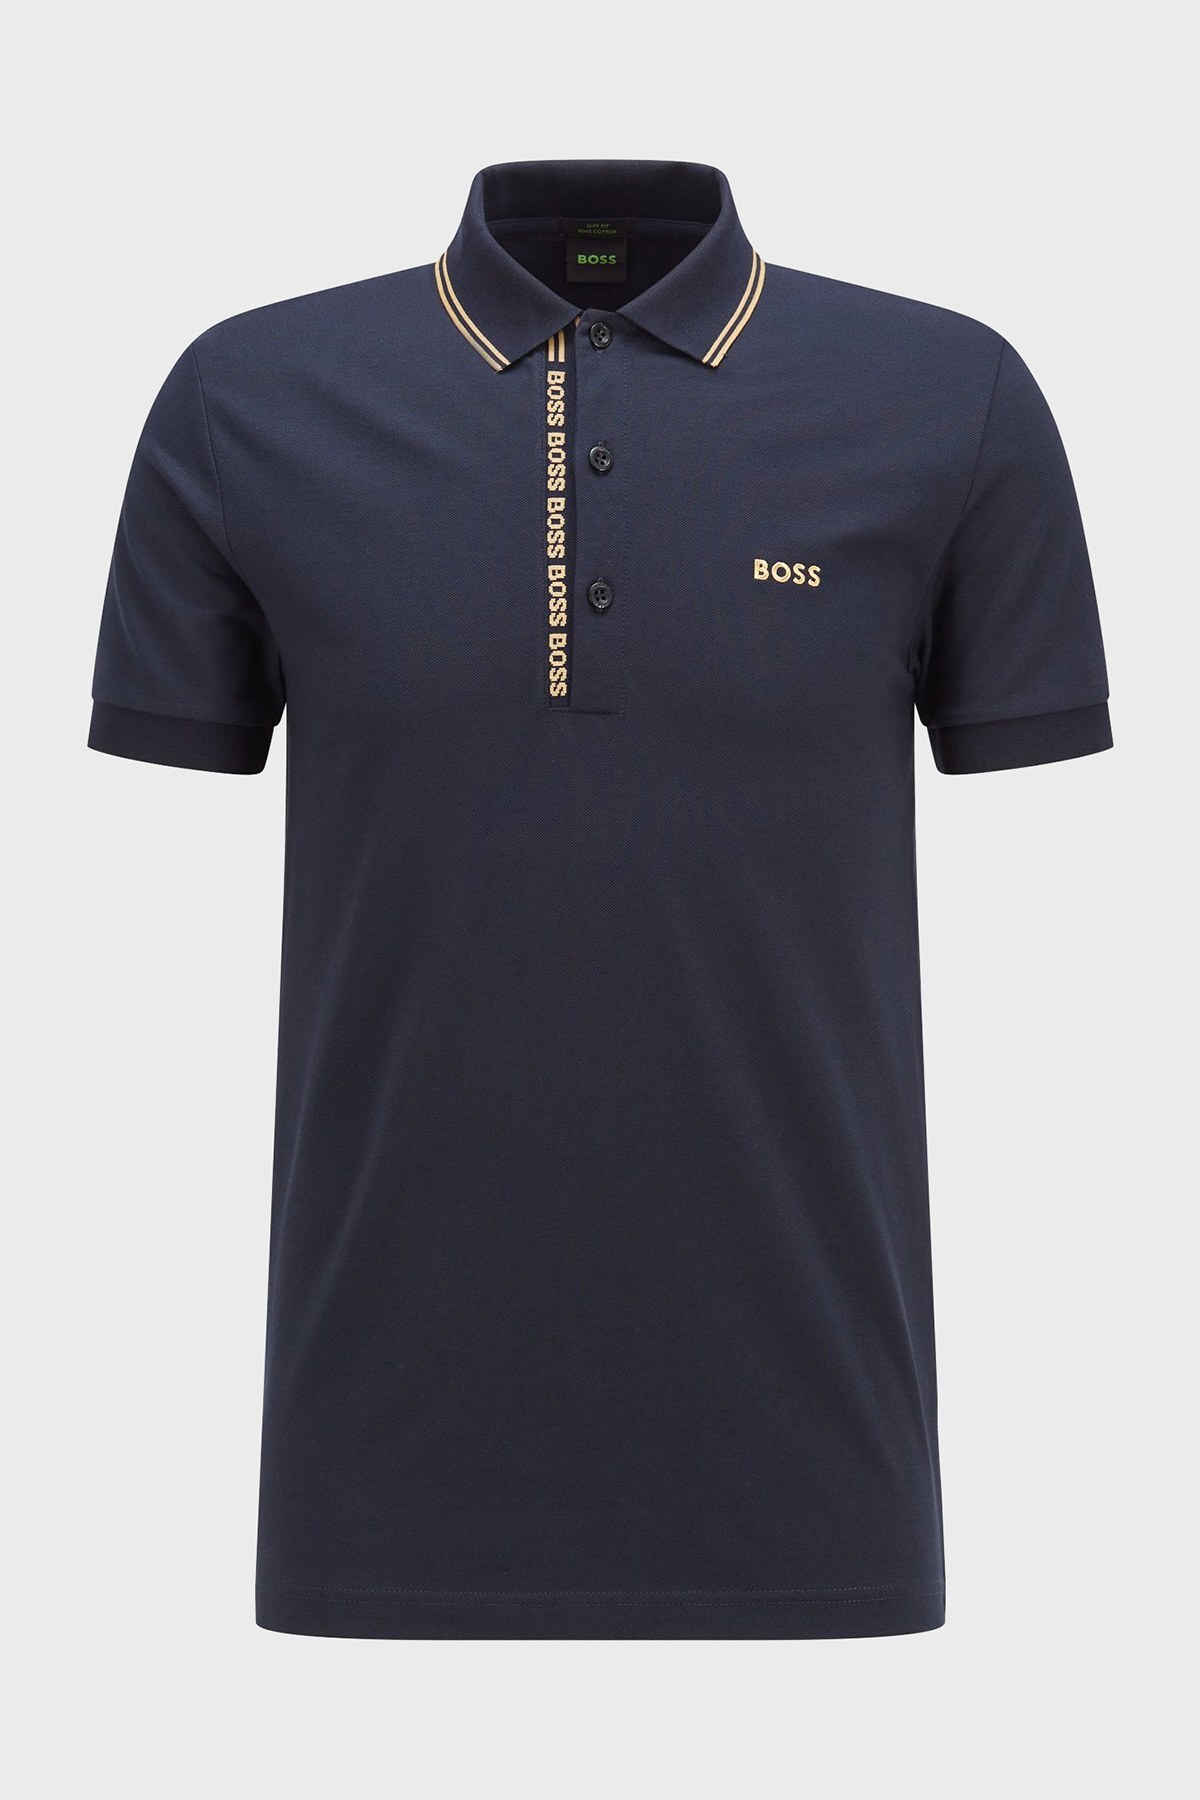 Boss Marka Logolu % 100 Pamuk Düğmeli Slim Fit T Shirt Erkek Polo 50469391 403 LACİVERT